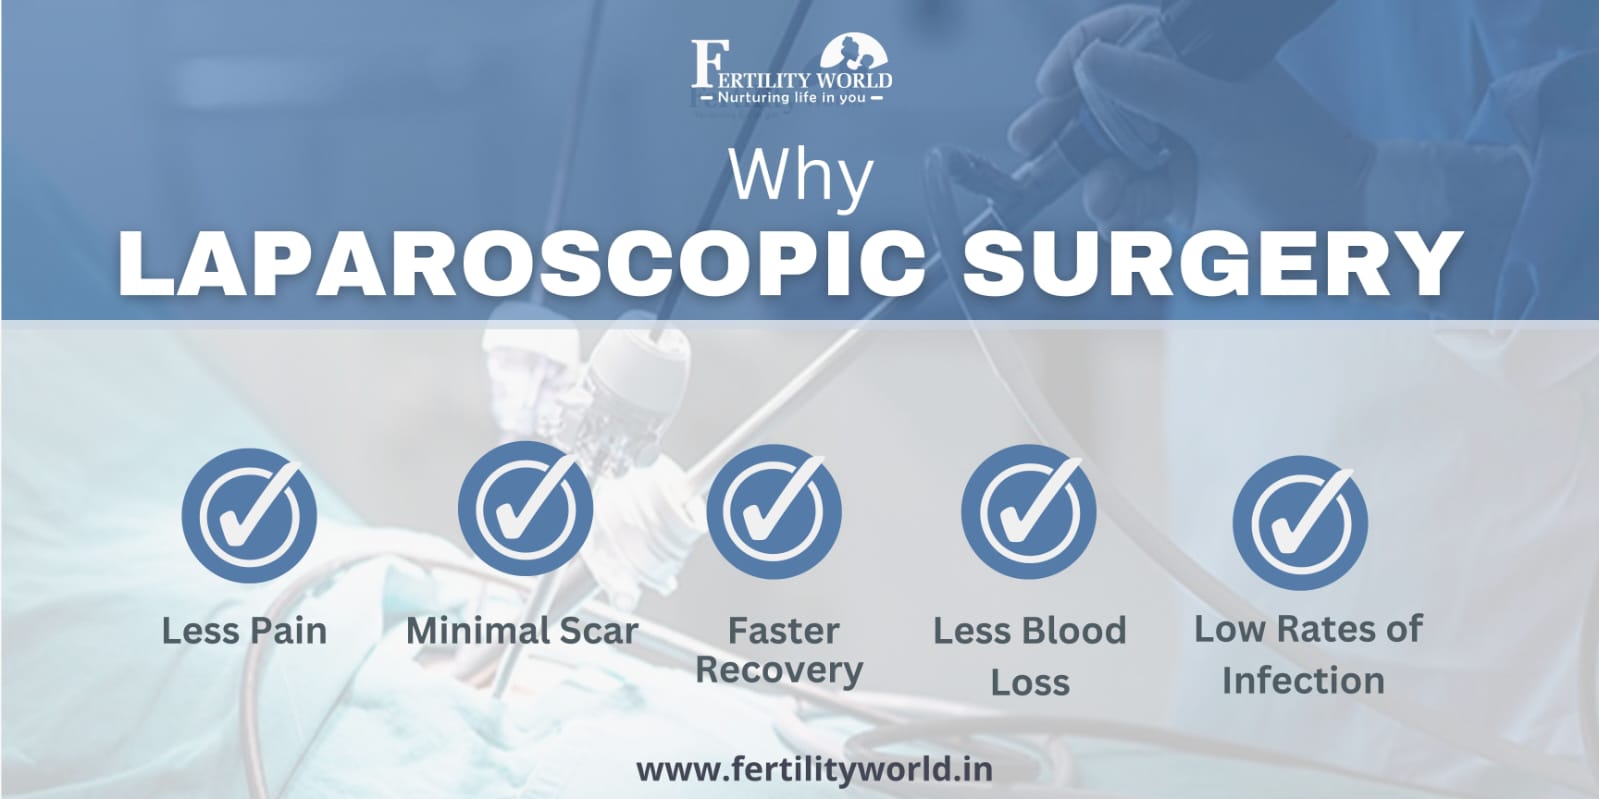 Benefits of Laparoscopic surgery than other surgeries